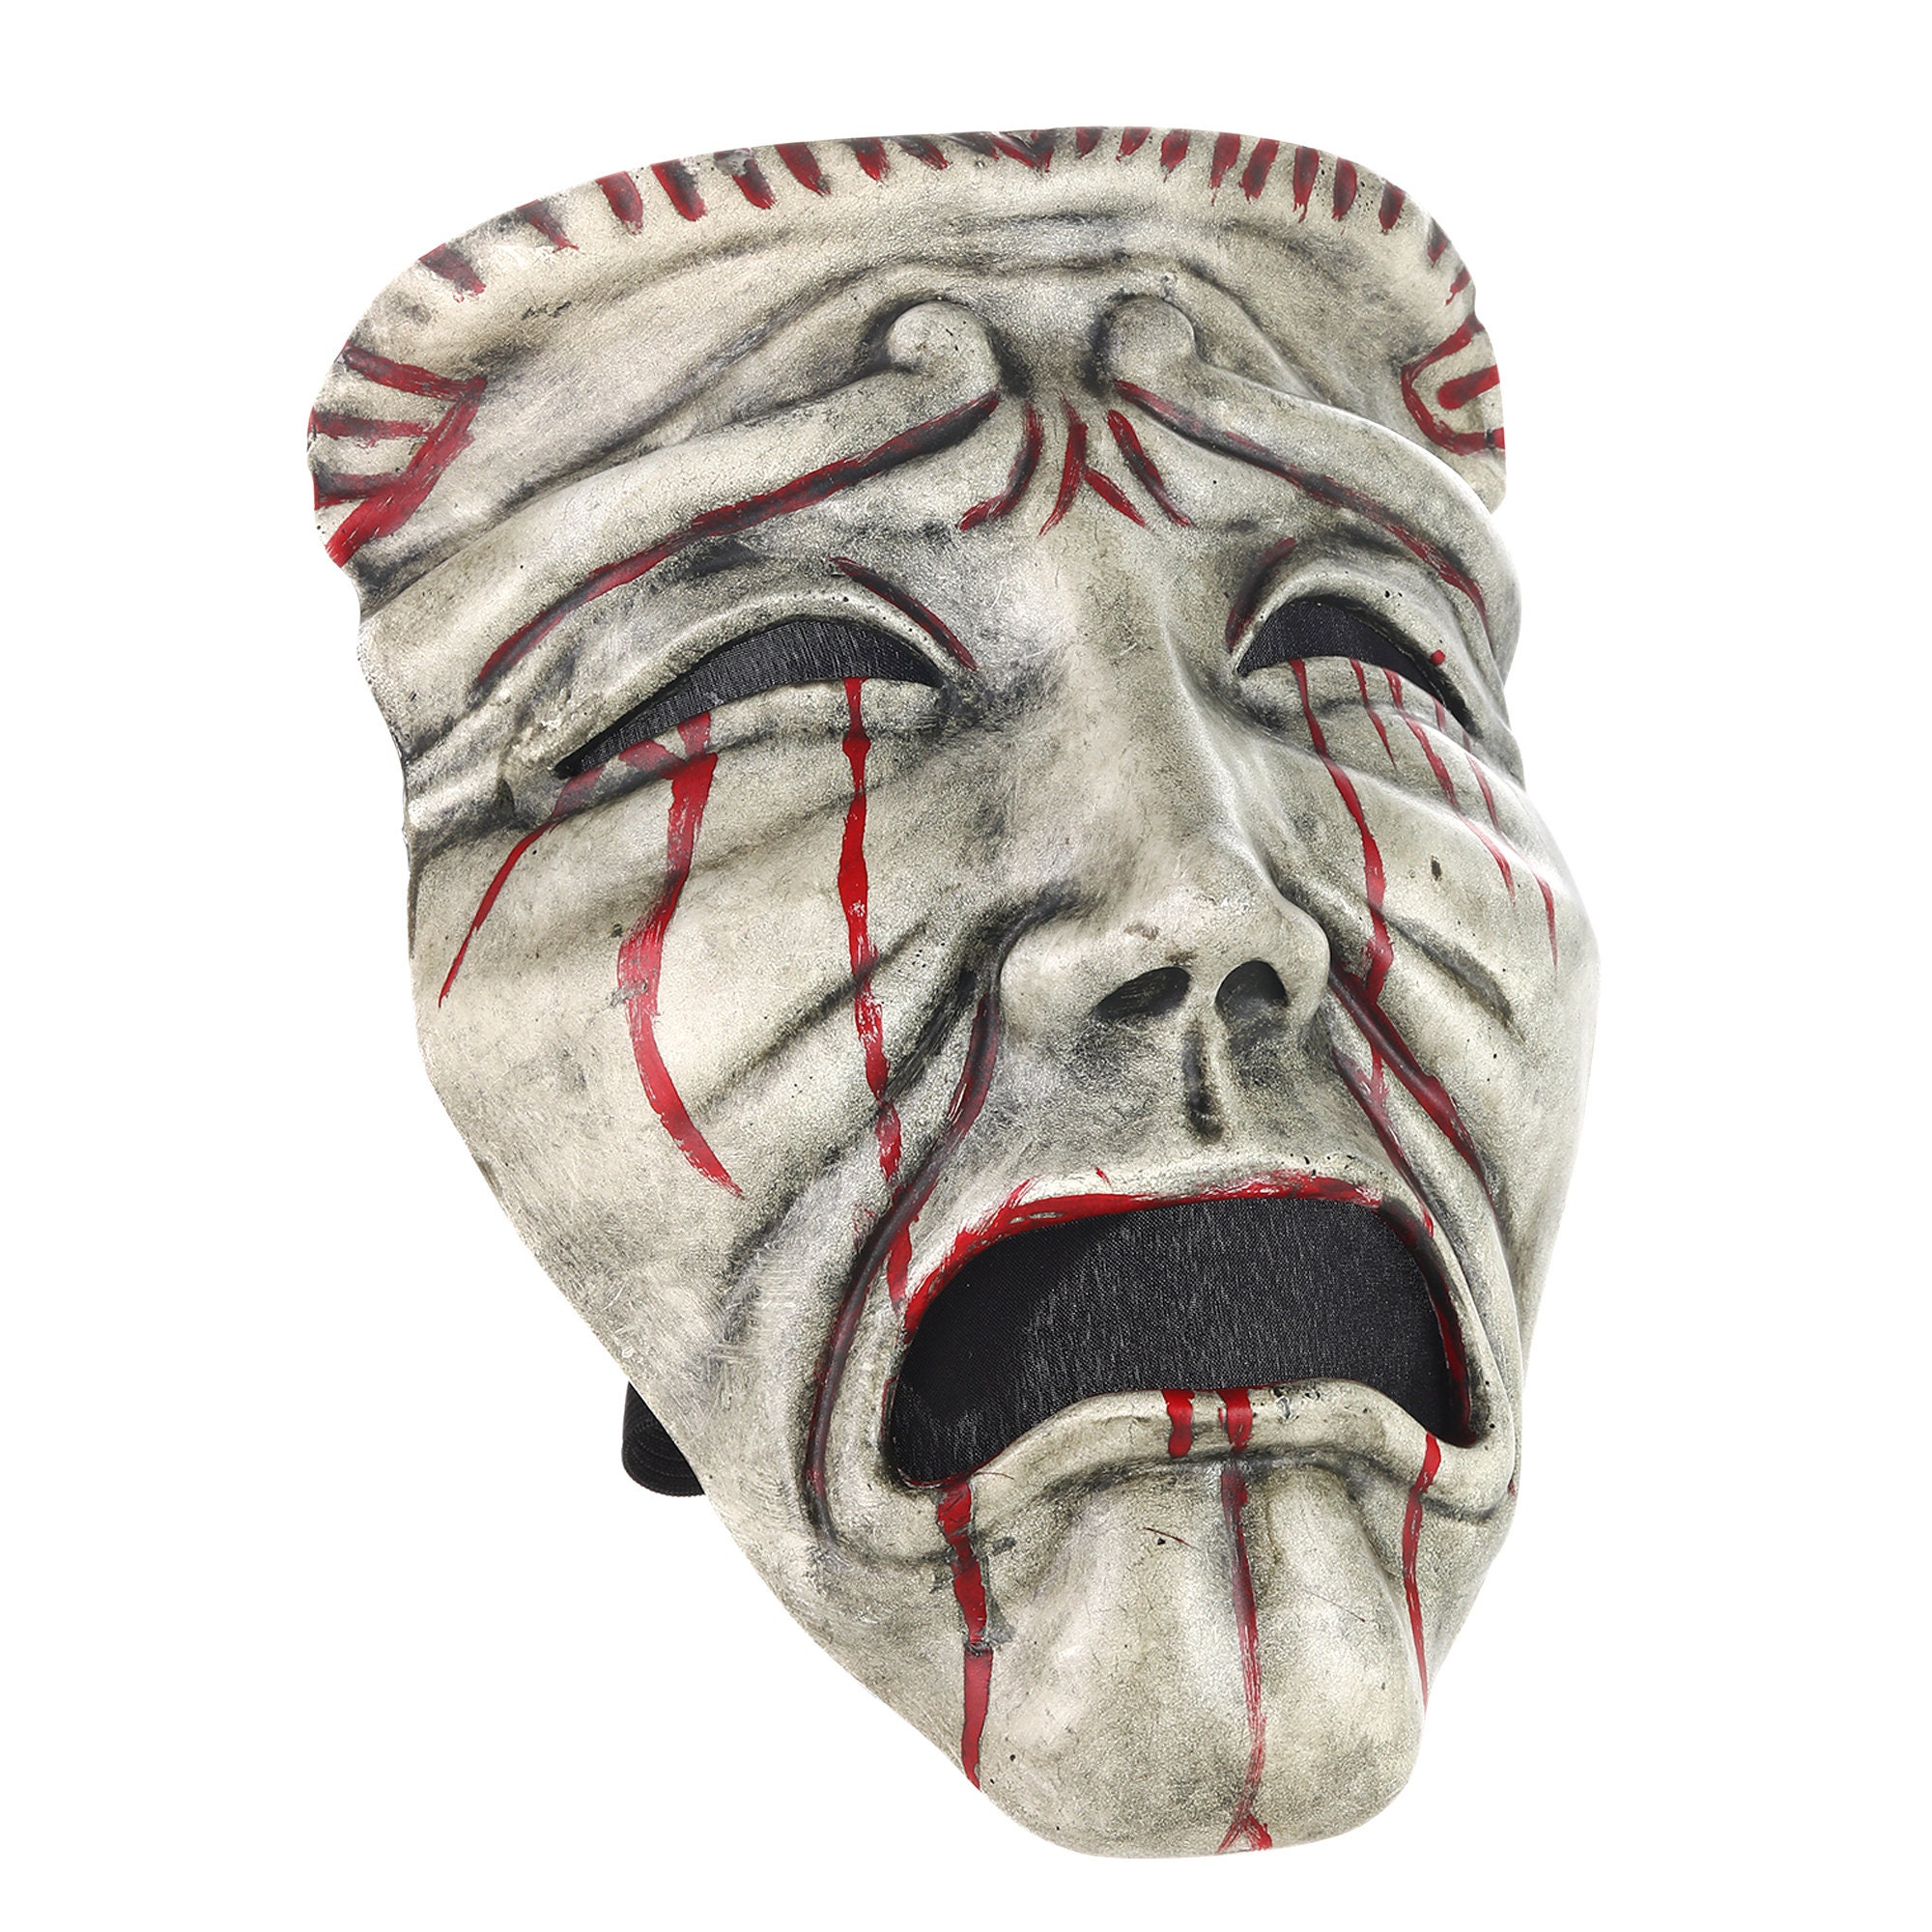 SCP 035 Mask Greek Comedy Mask Tragedy Mask Theater Mask 1:1 